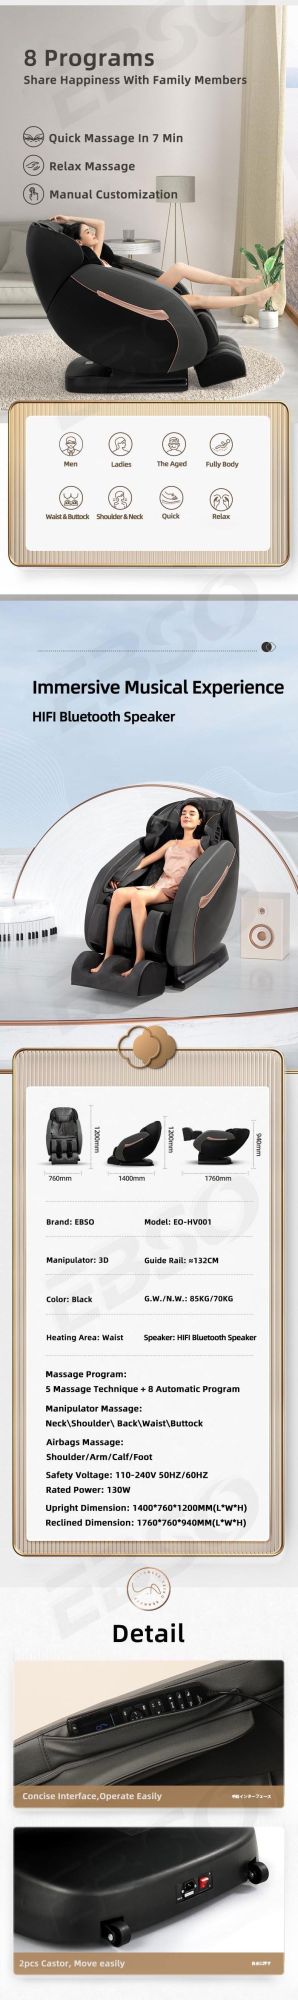 Full Body Massage Chair Modern Design with Bluetooth Speaker